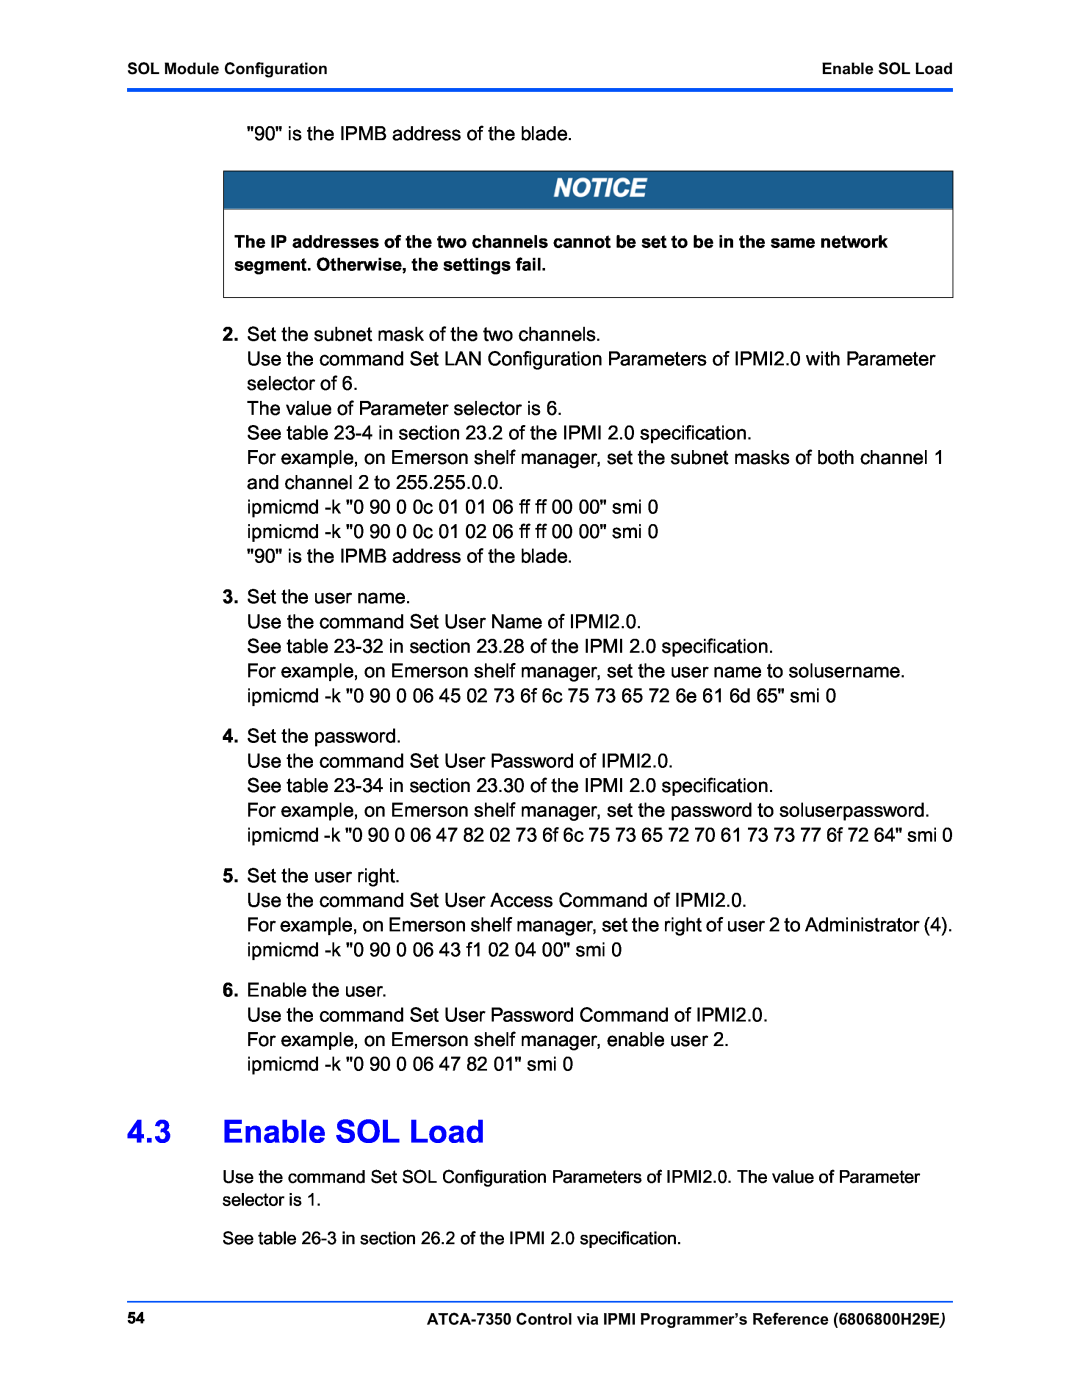 Emerson ATCA-7350 manual 4.3Enable SOL Load 